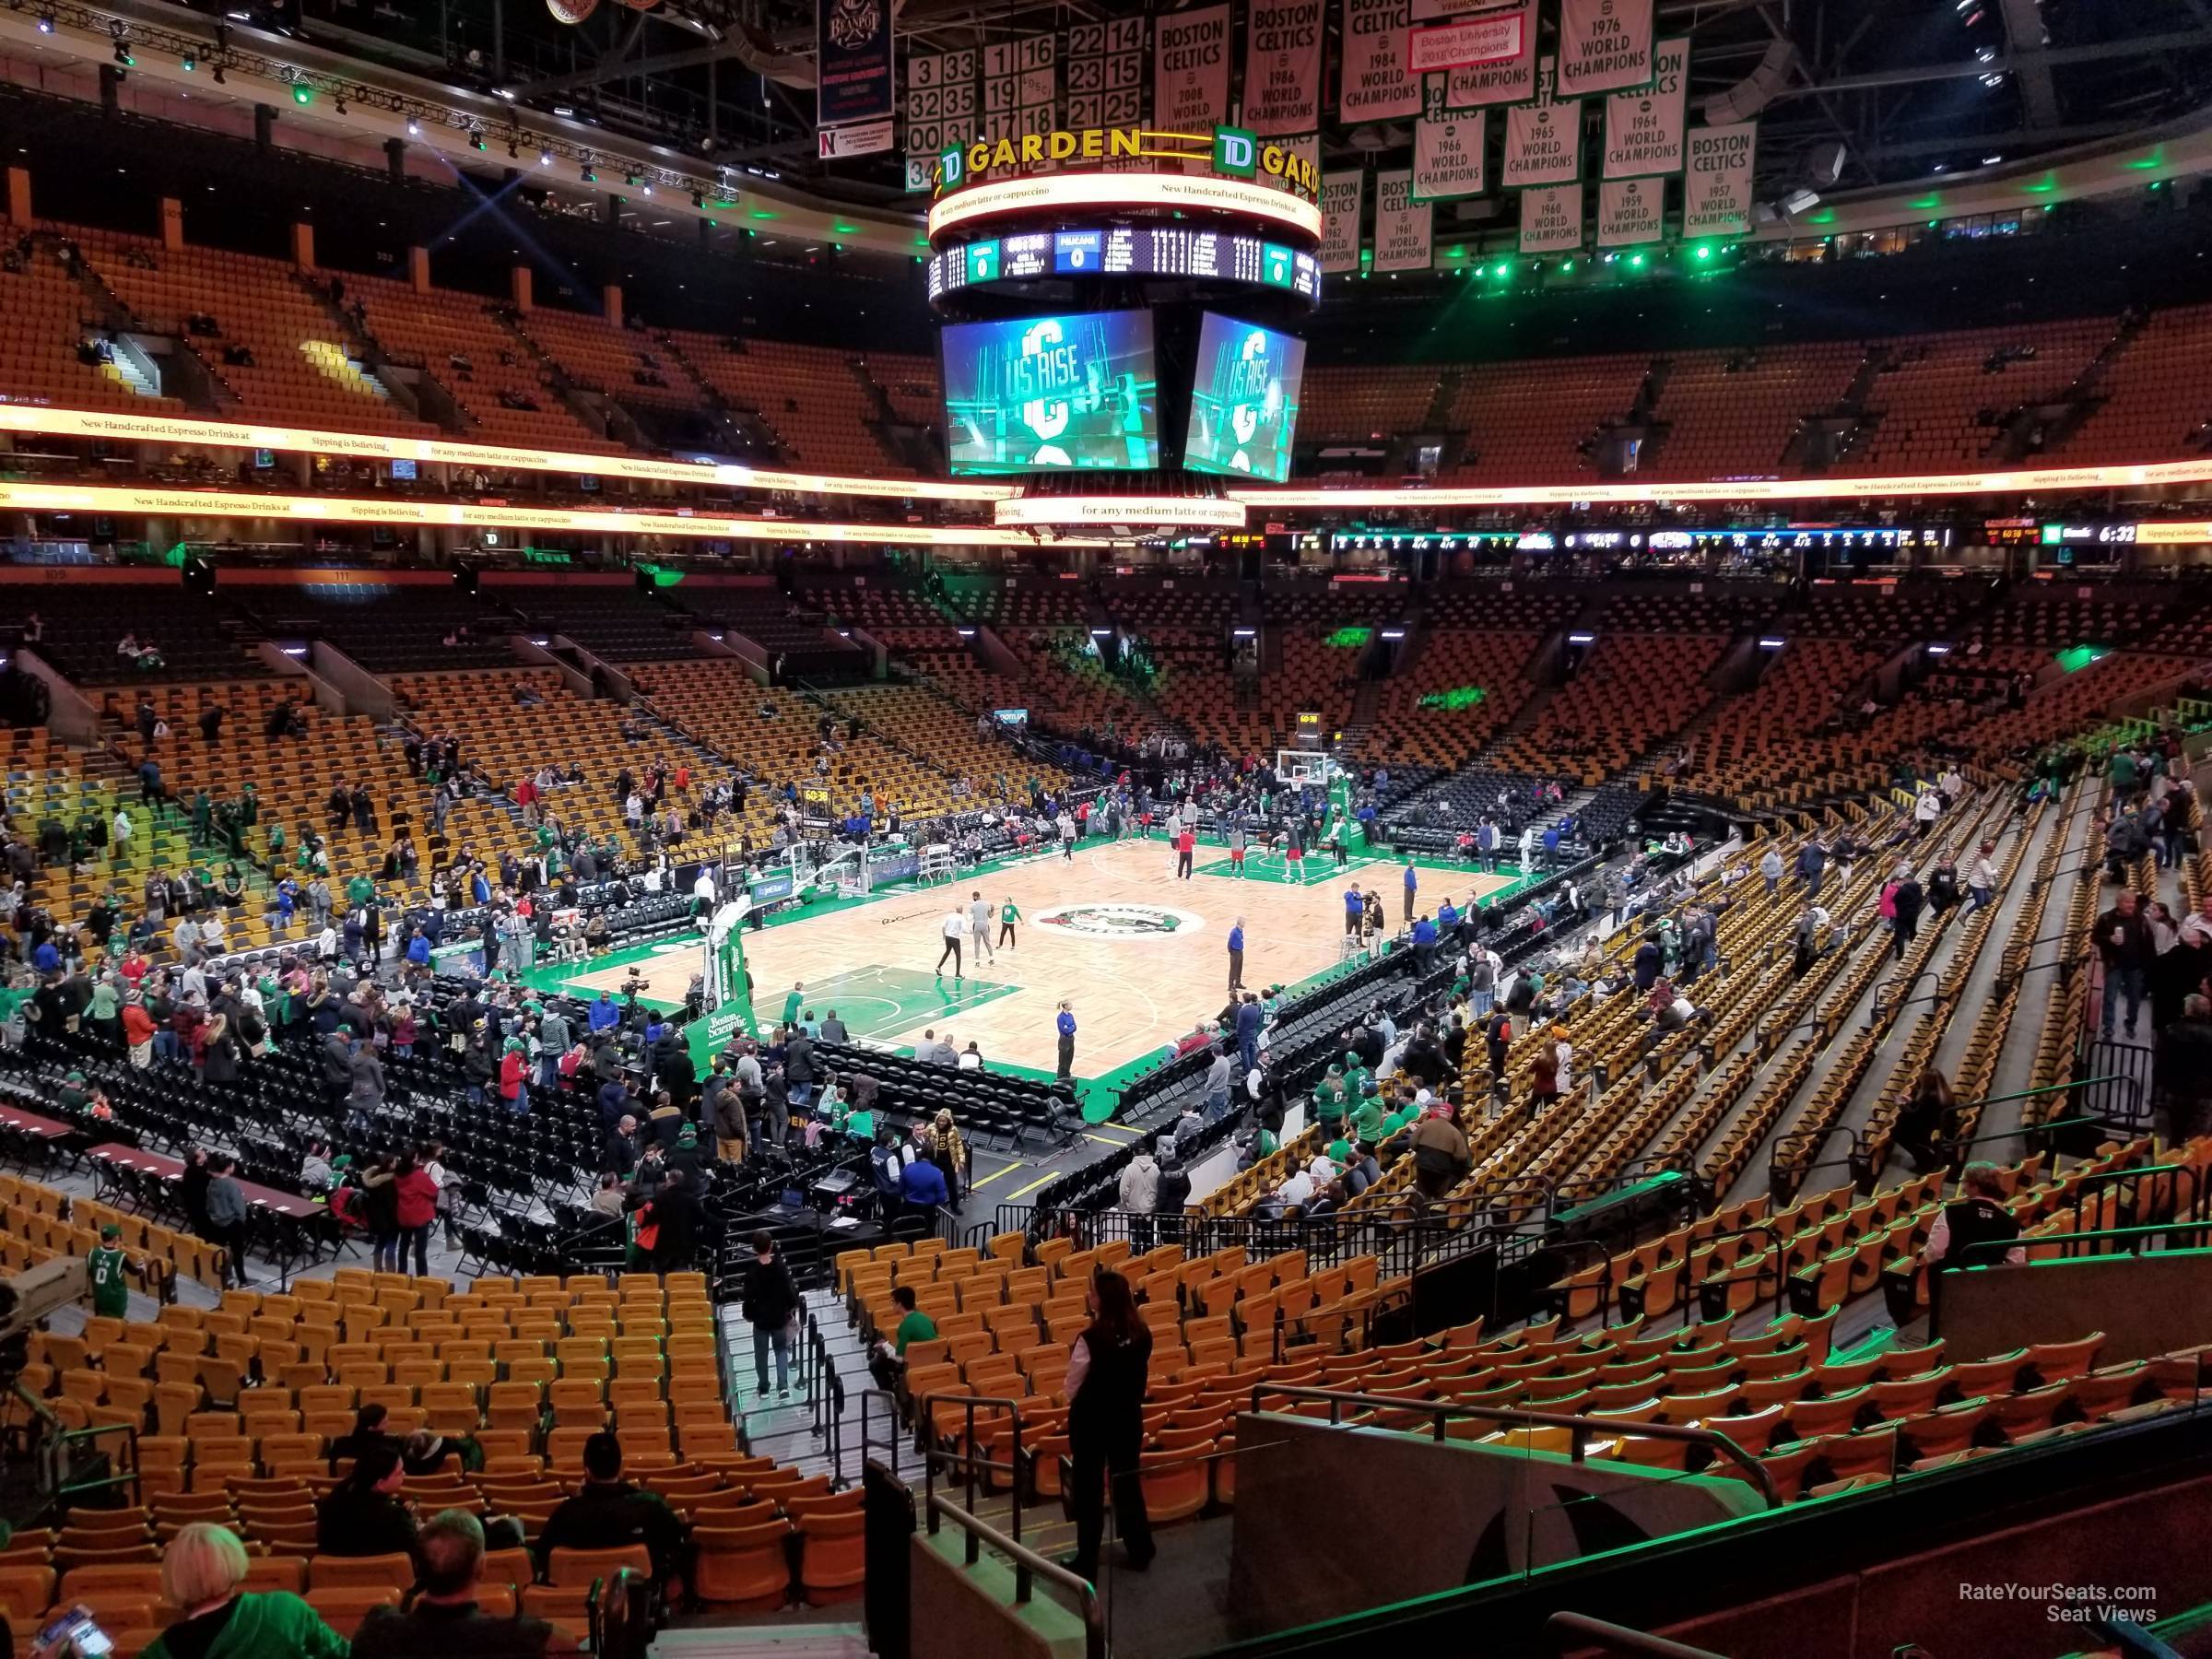 Loge 16 at TD Garden Boston Celtics RateYourSeats com